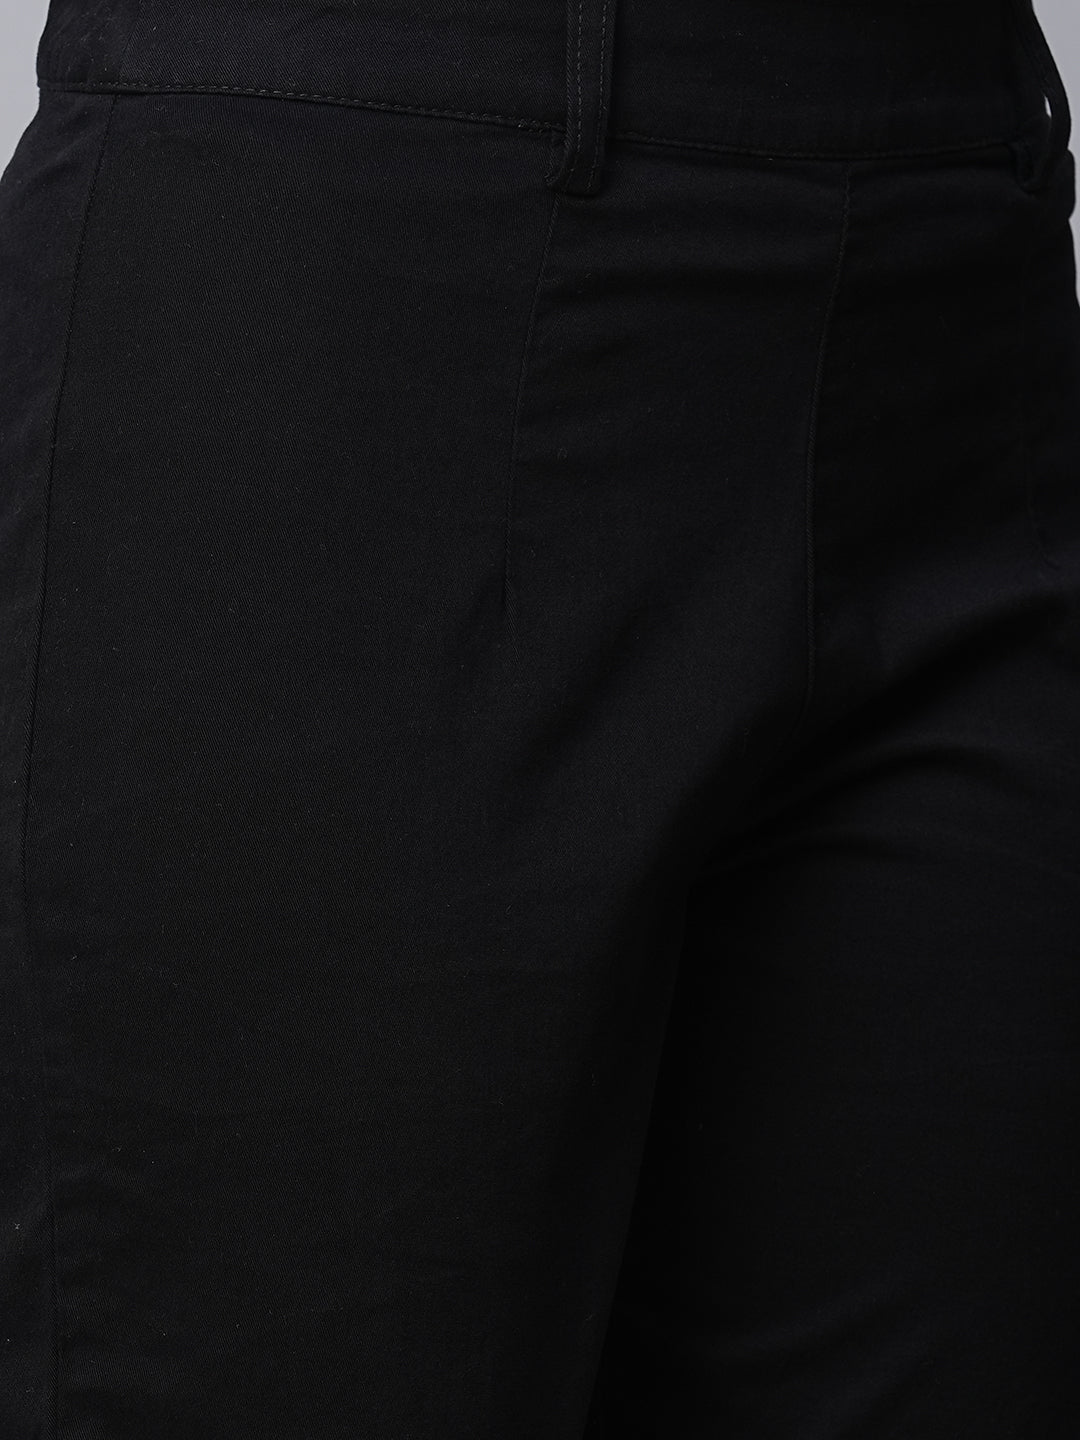 Buy ALLEN SOLLY Black Women's Solid Formal Trousers | Shoppers Stop